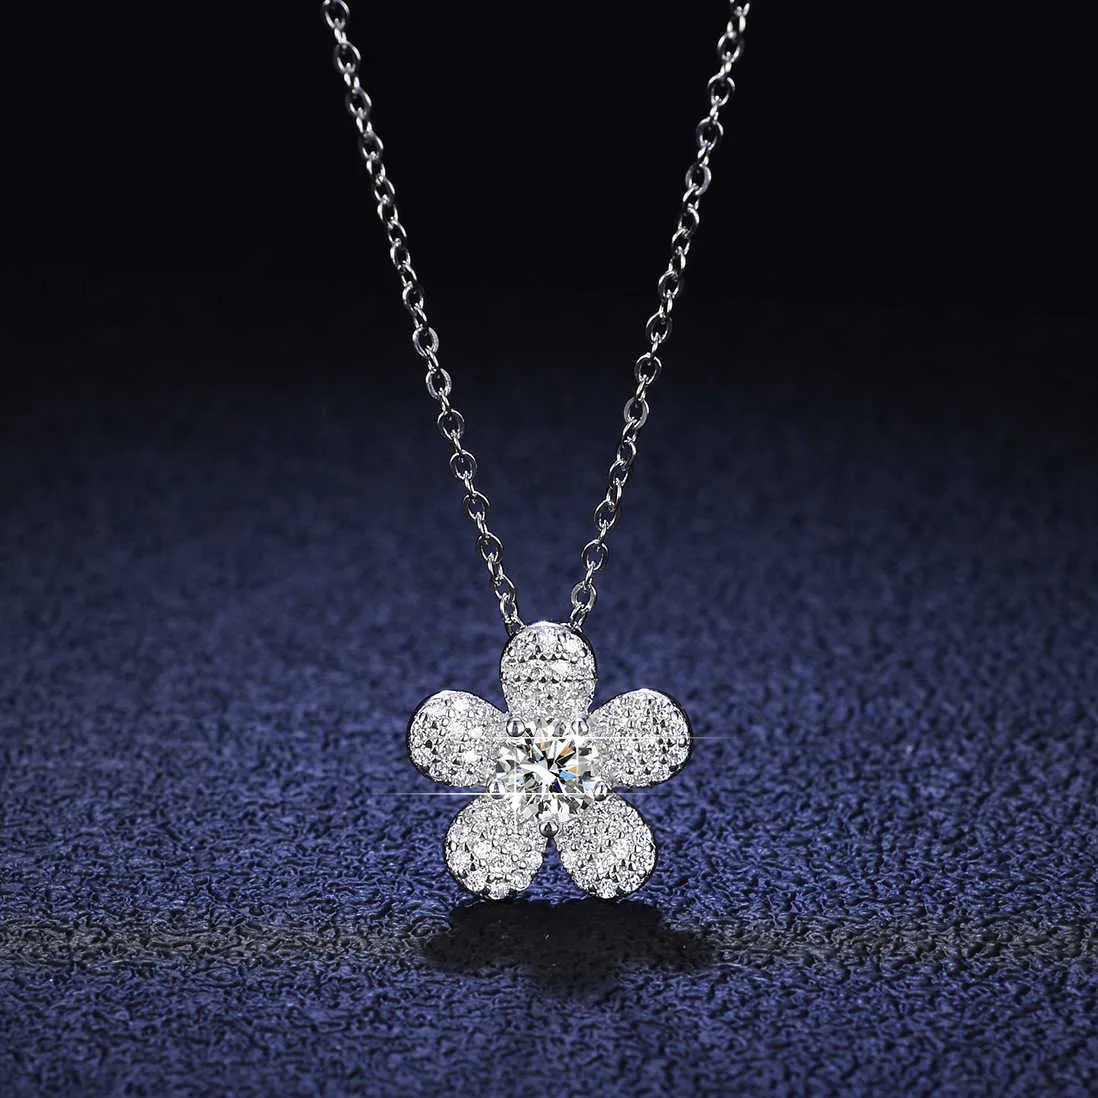 Sterling Sier 925ペンダント1 Moissant Diamond Necklace Womens Fashion Camellia Sier Pendant Collar Chain